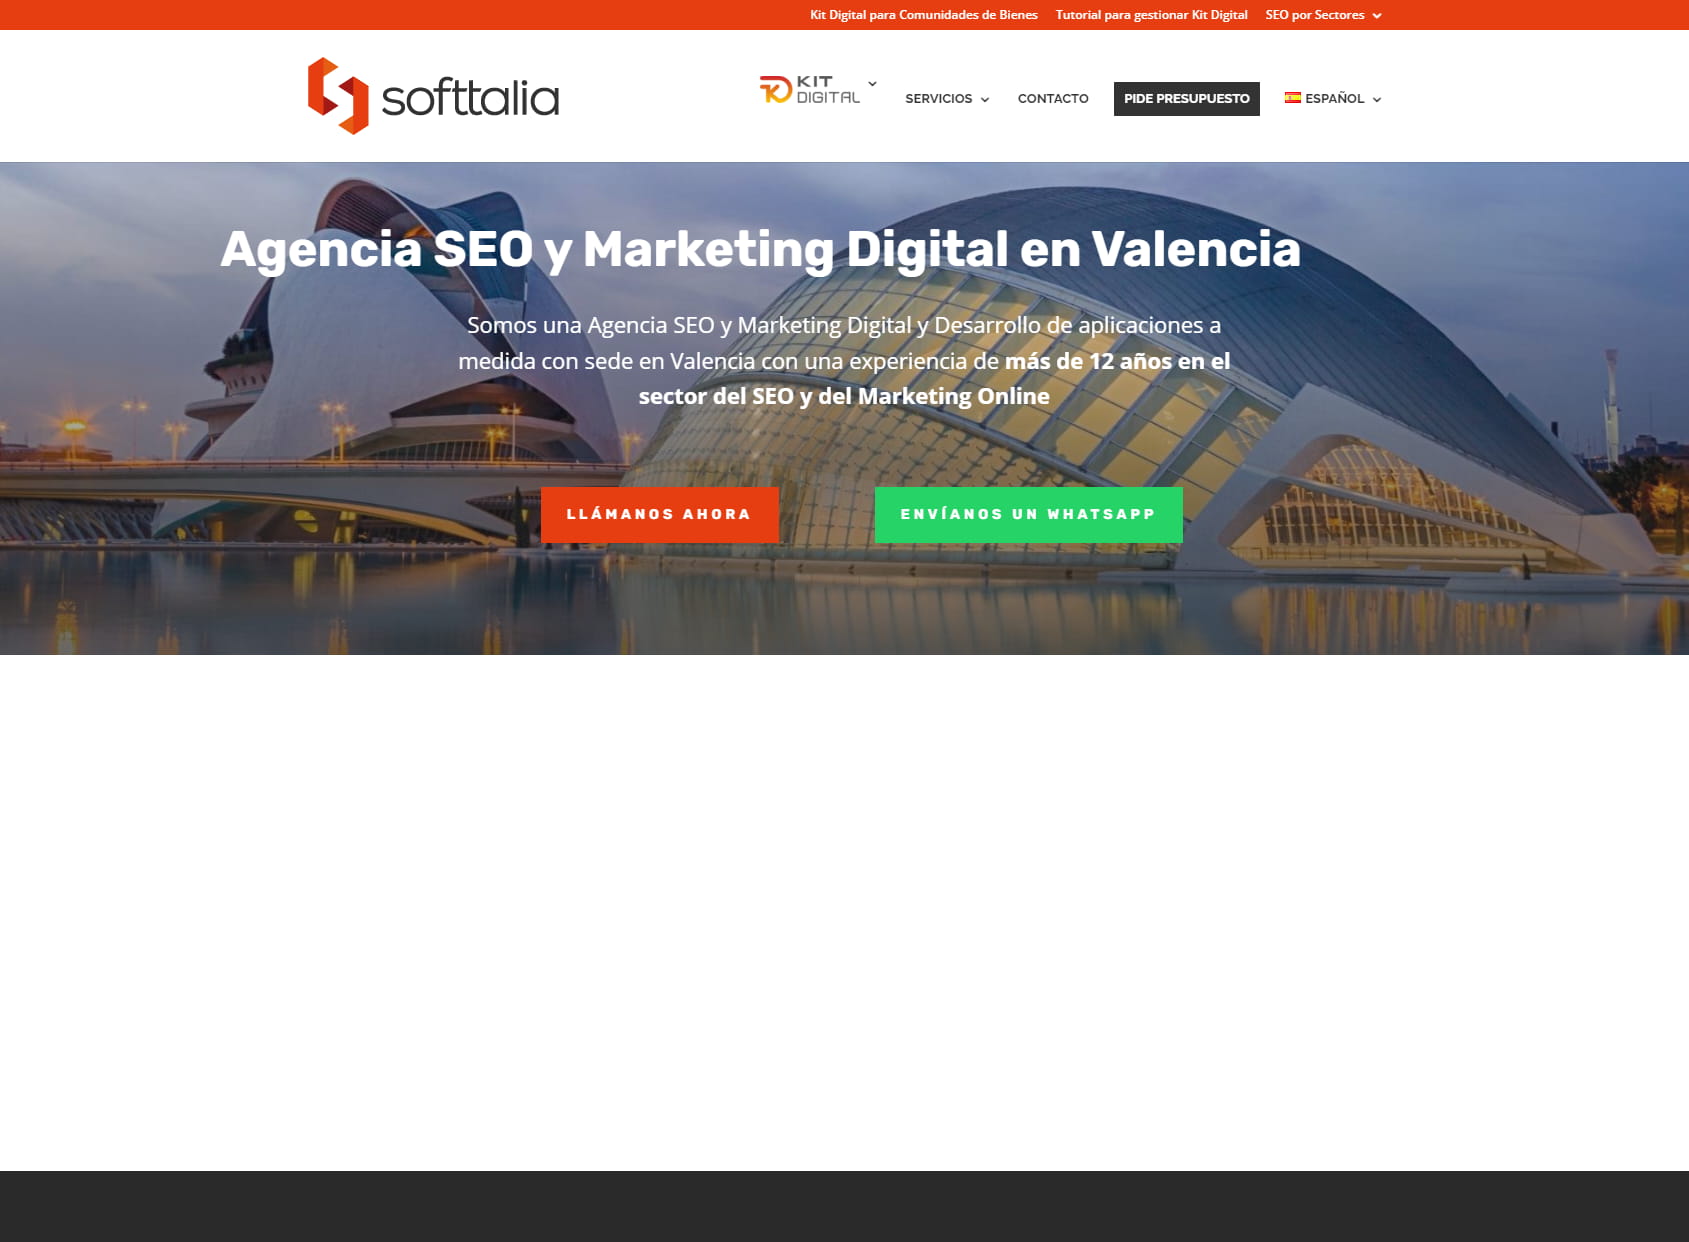 Softtalia SEO & Marketing B2B